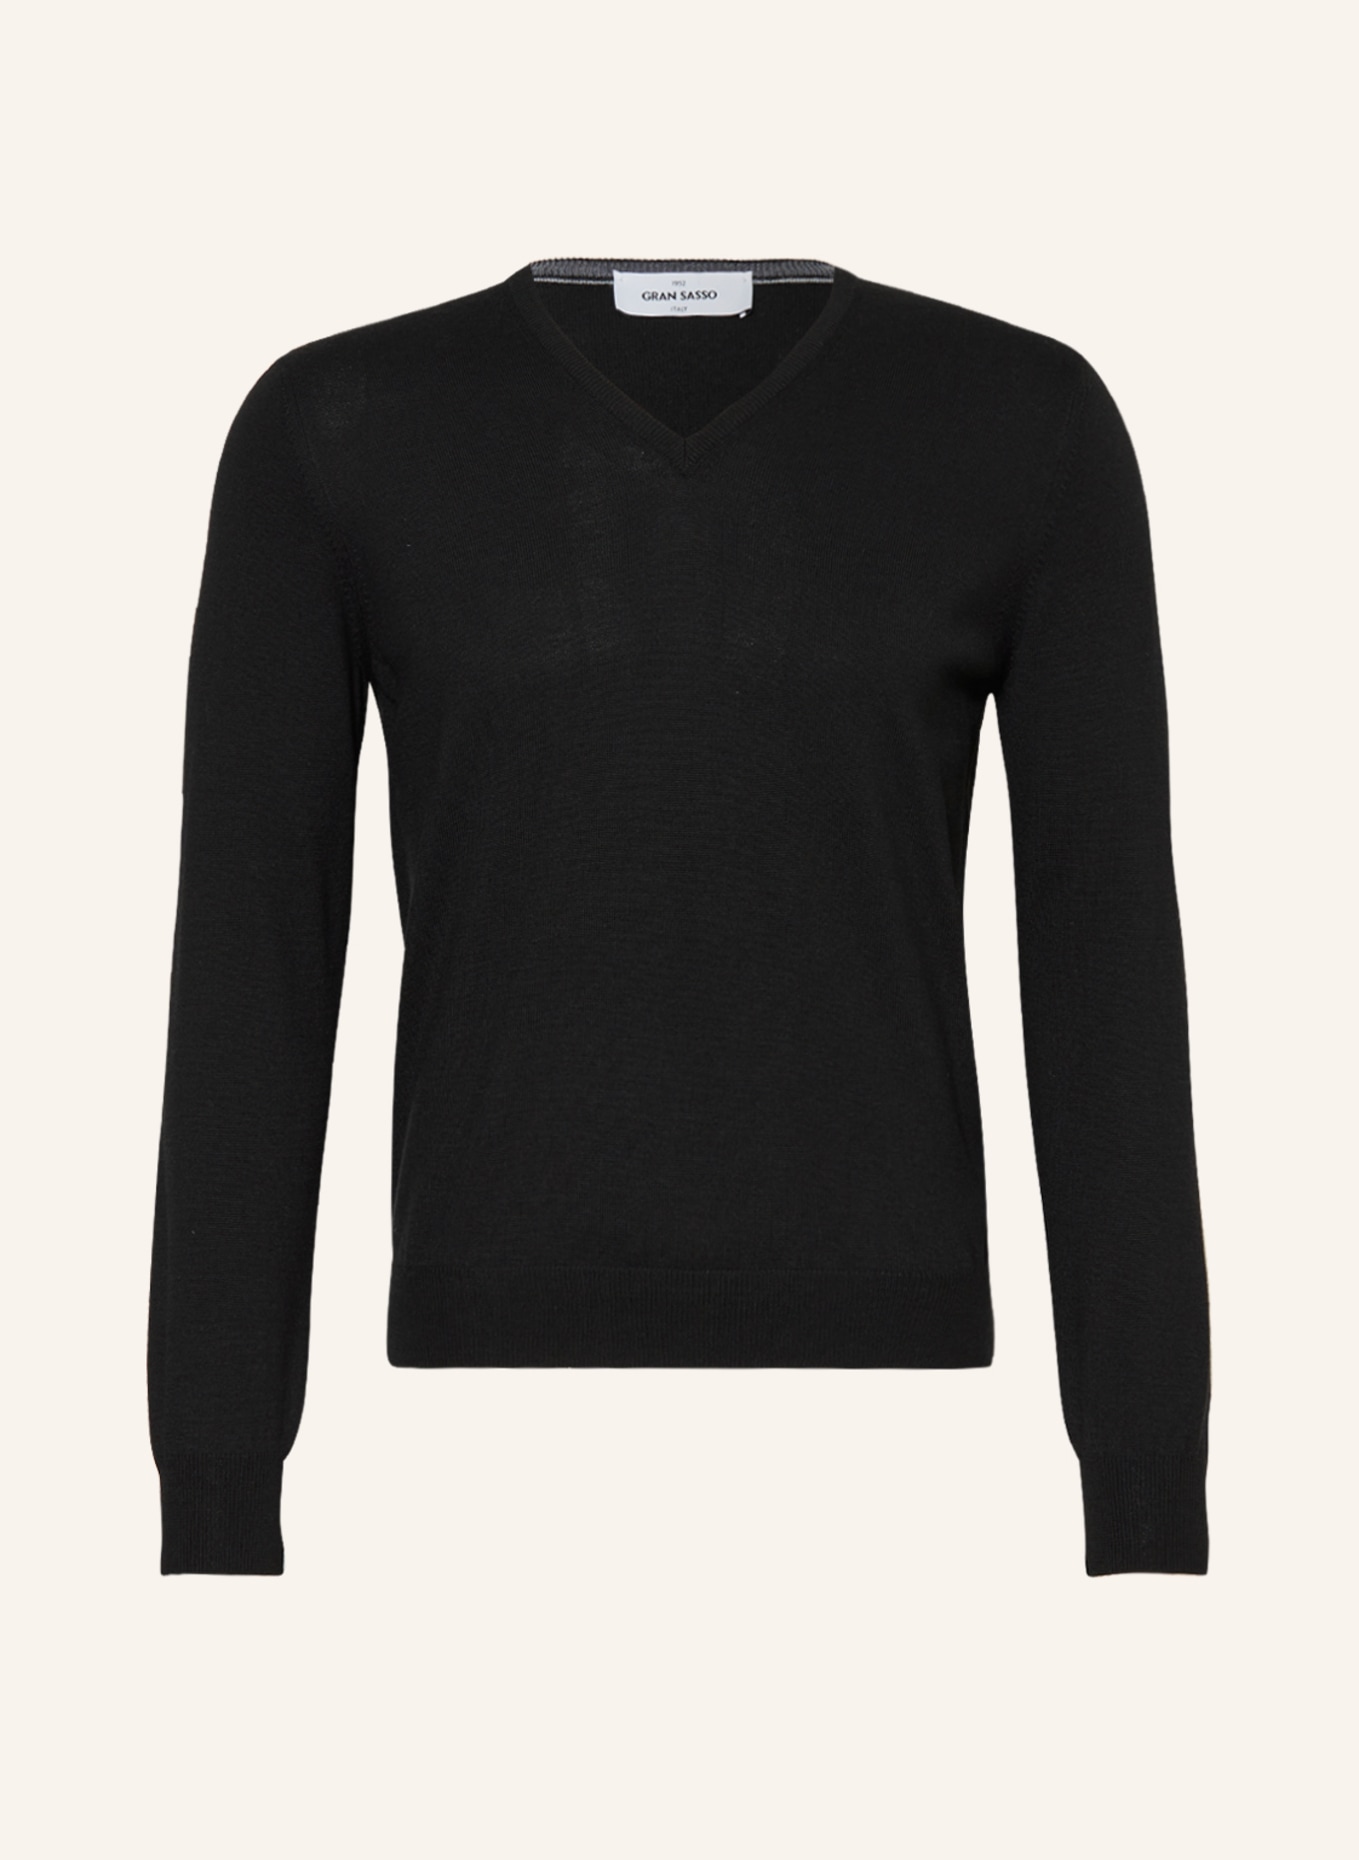 GRAN SASSO Pullover, Farbe: SCHWARZ (Bild 1)